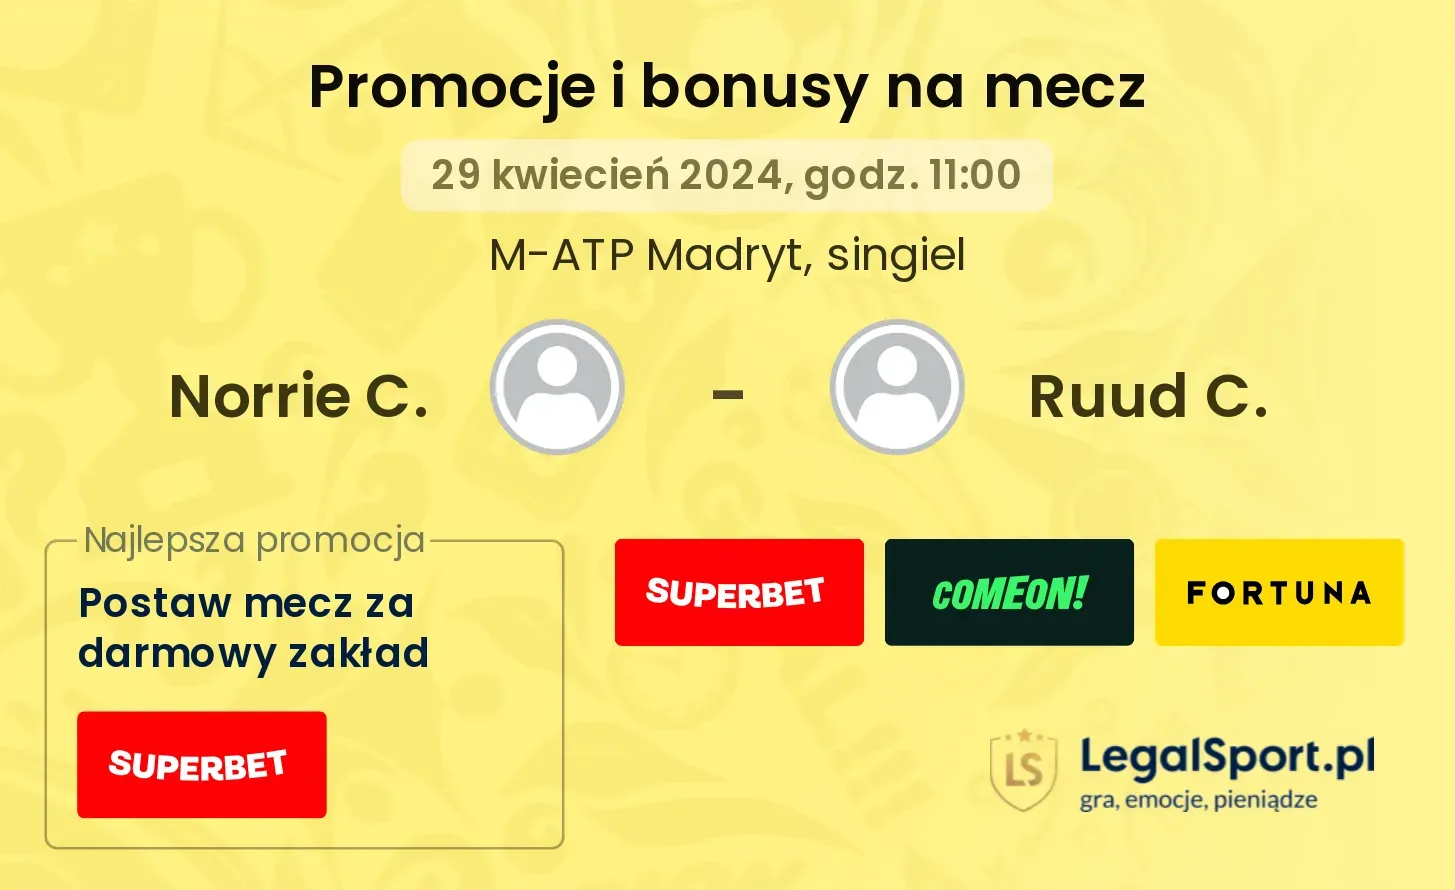 Norrie C. - Ruud C. promocje bonusy na mecz